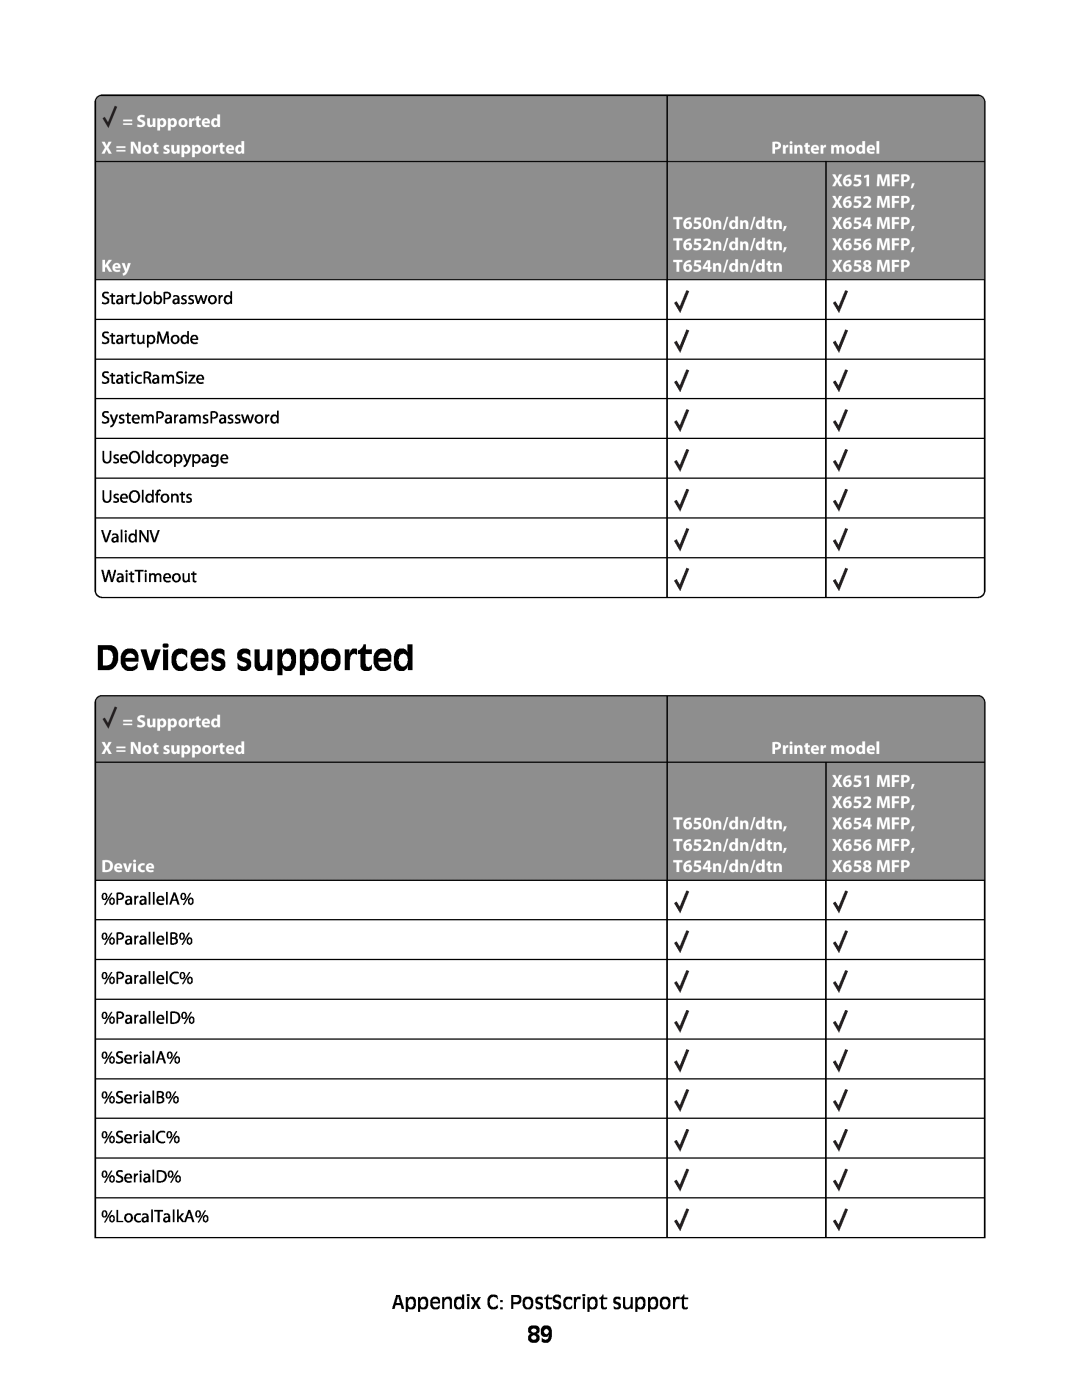 Lexmark X656 MFP, X652 MFP, X654 MFP, X651 MFP, X658 MFP manual Devices supported, Appendix C PostScript support 